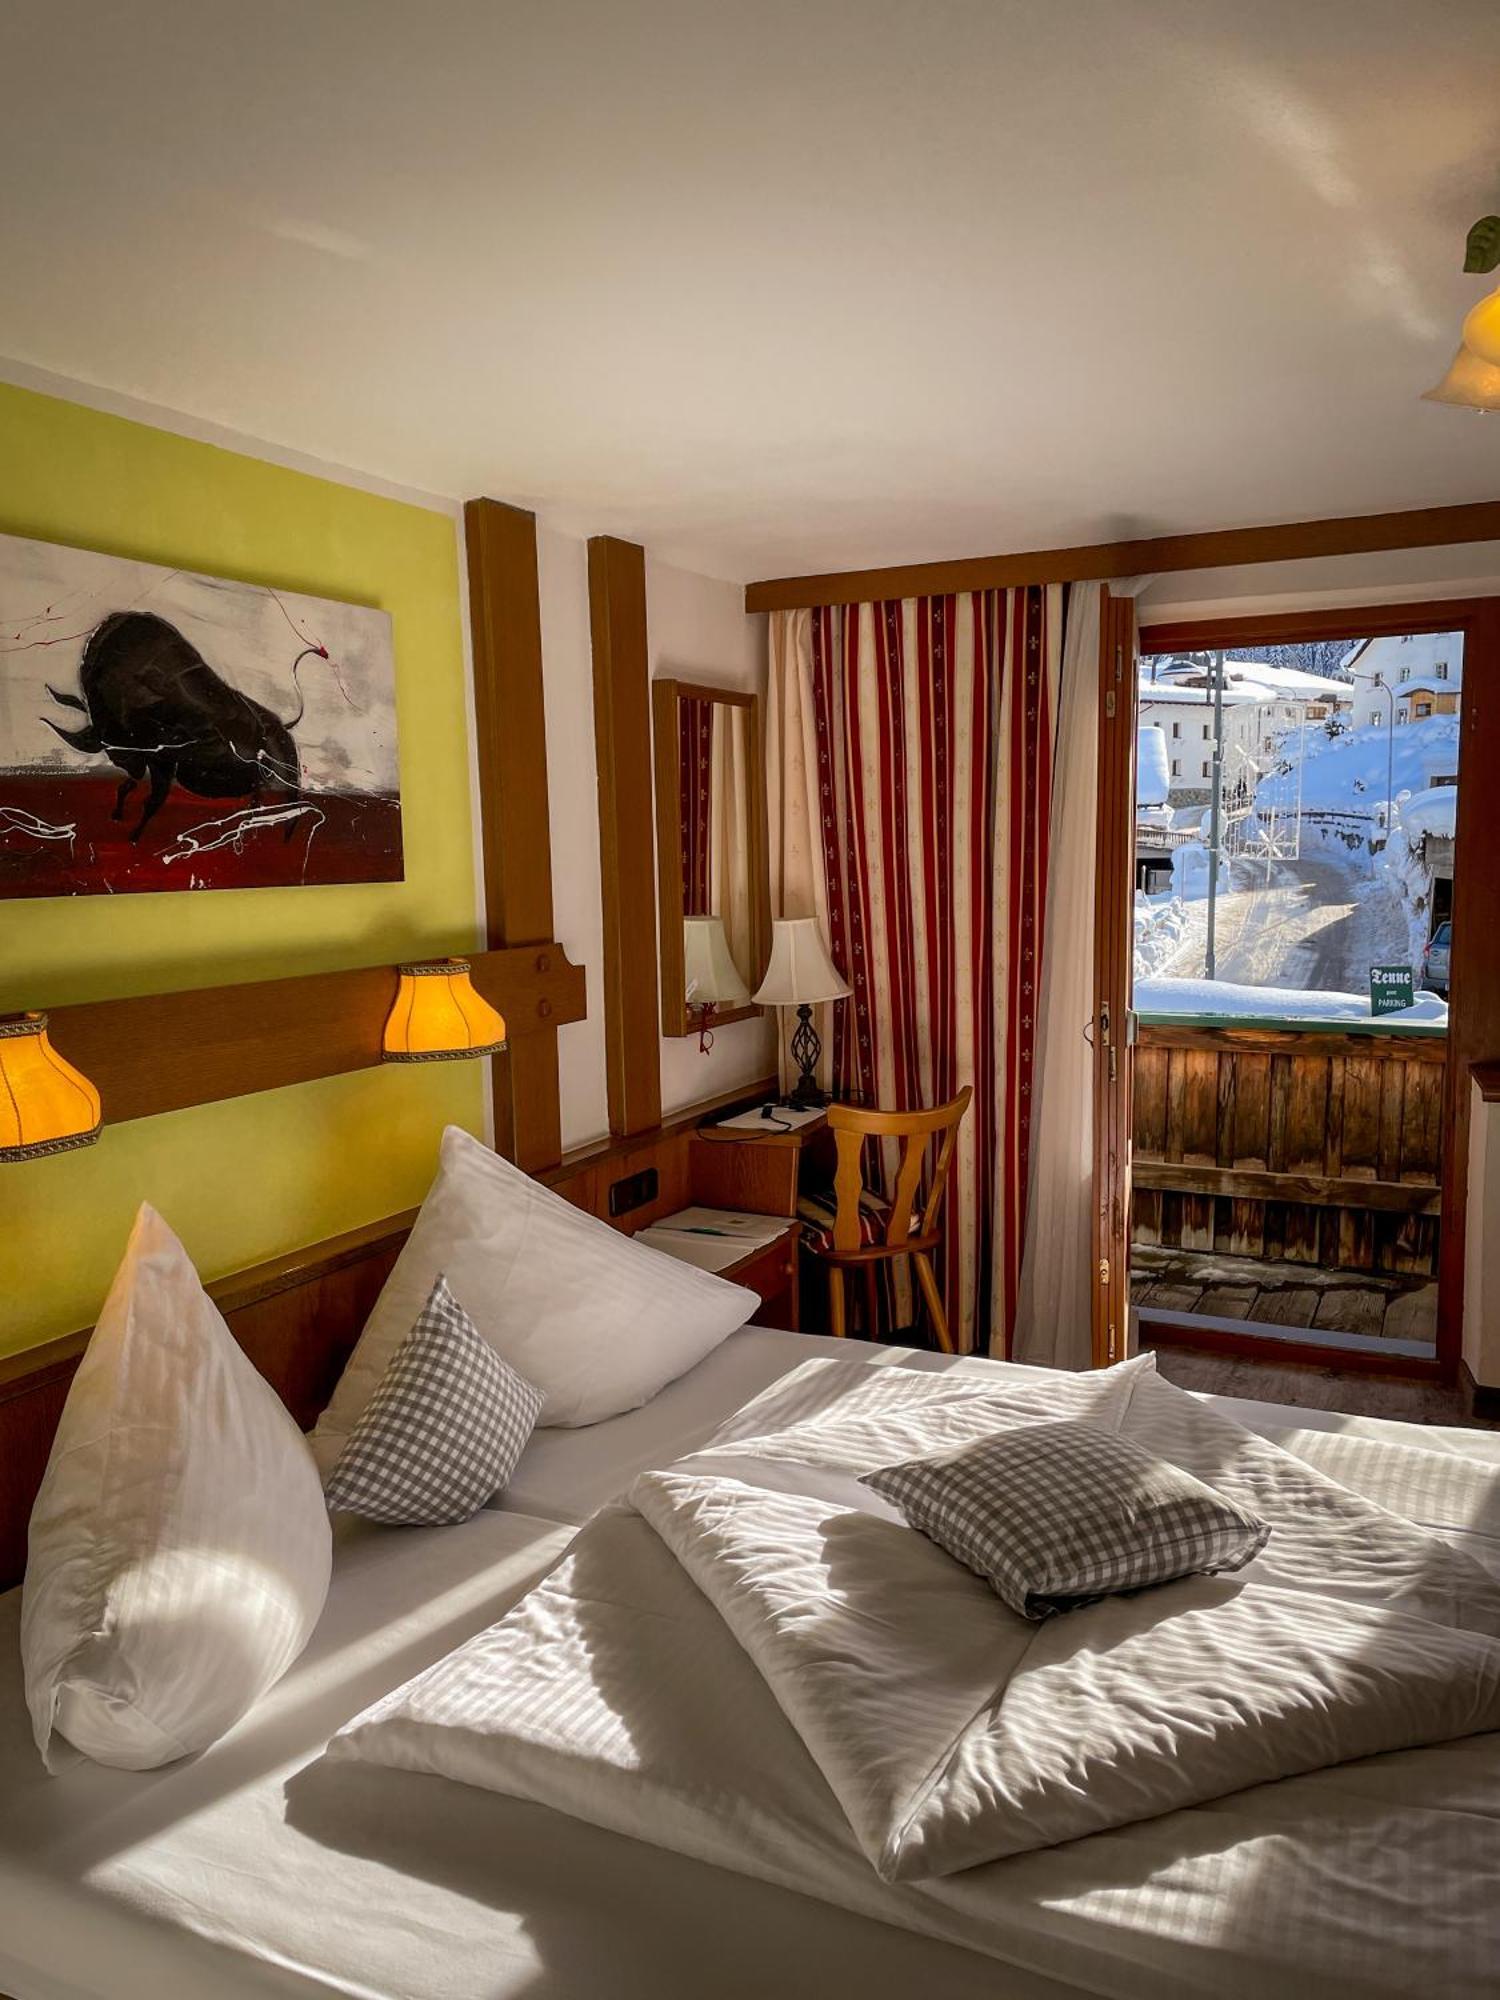 Hotel Tenne Sankt Anton am Arlberg Exterior photo